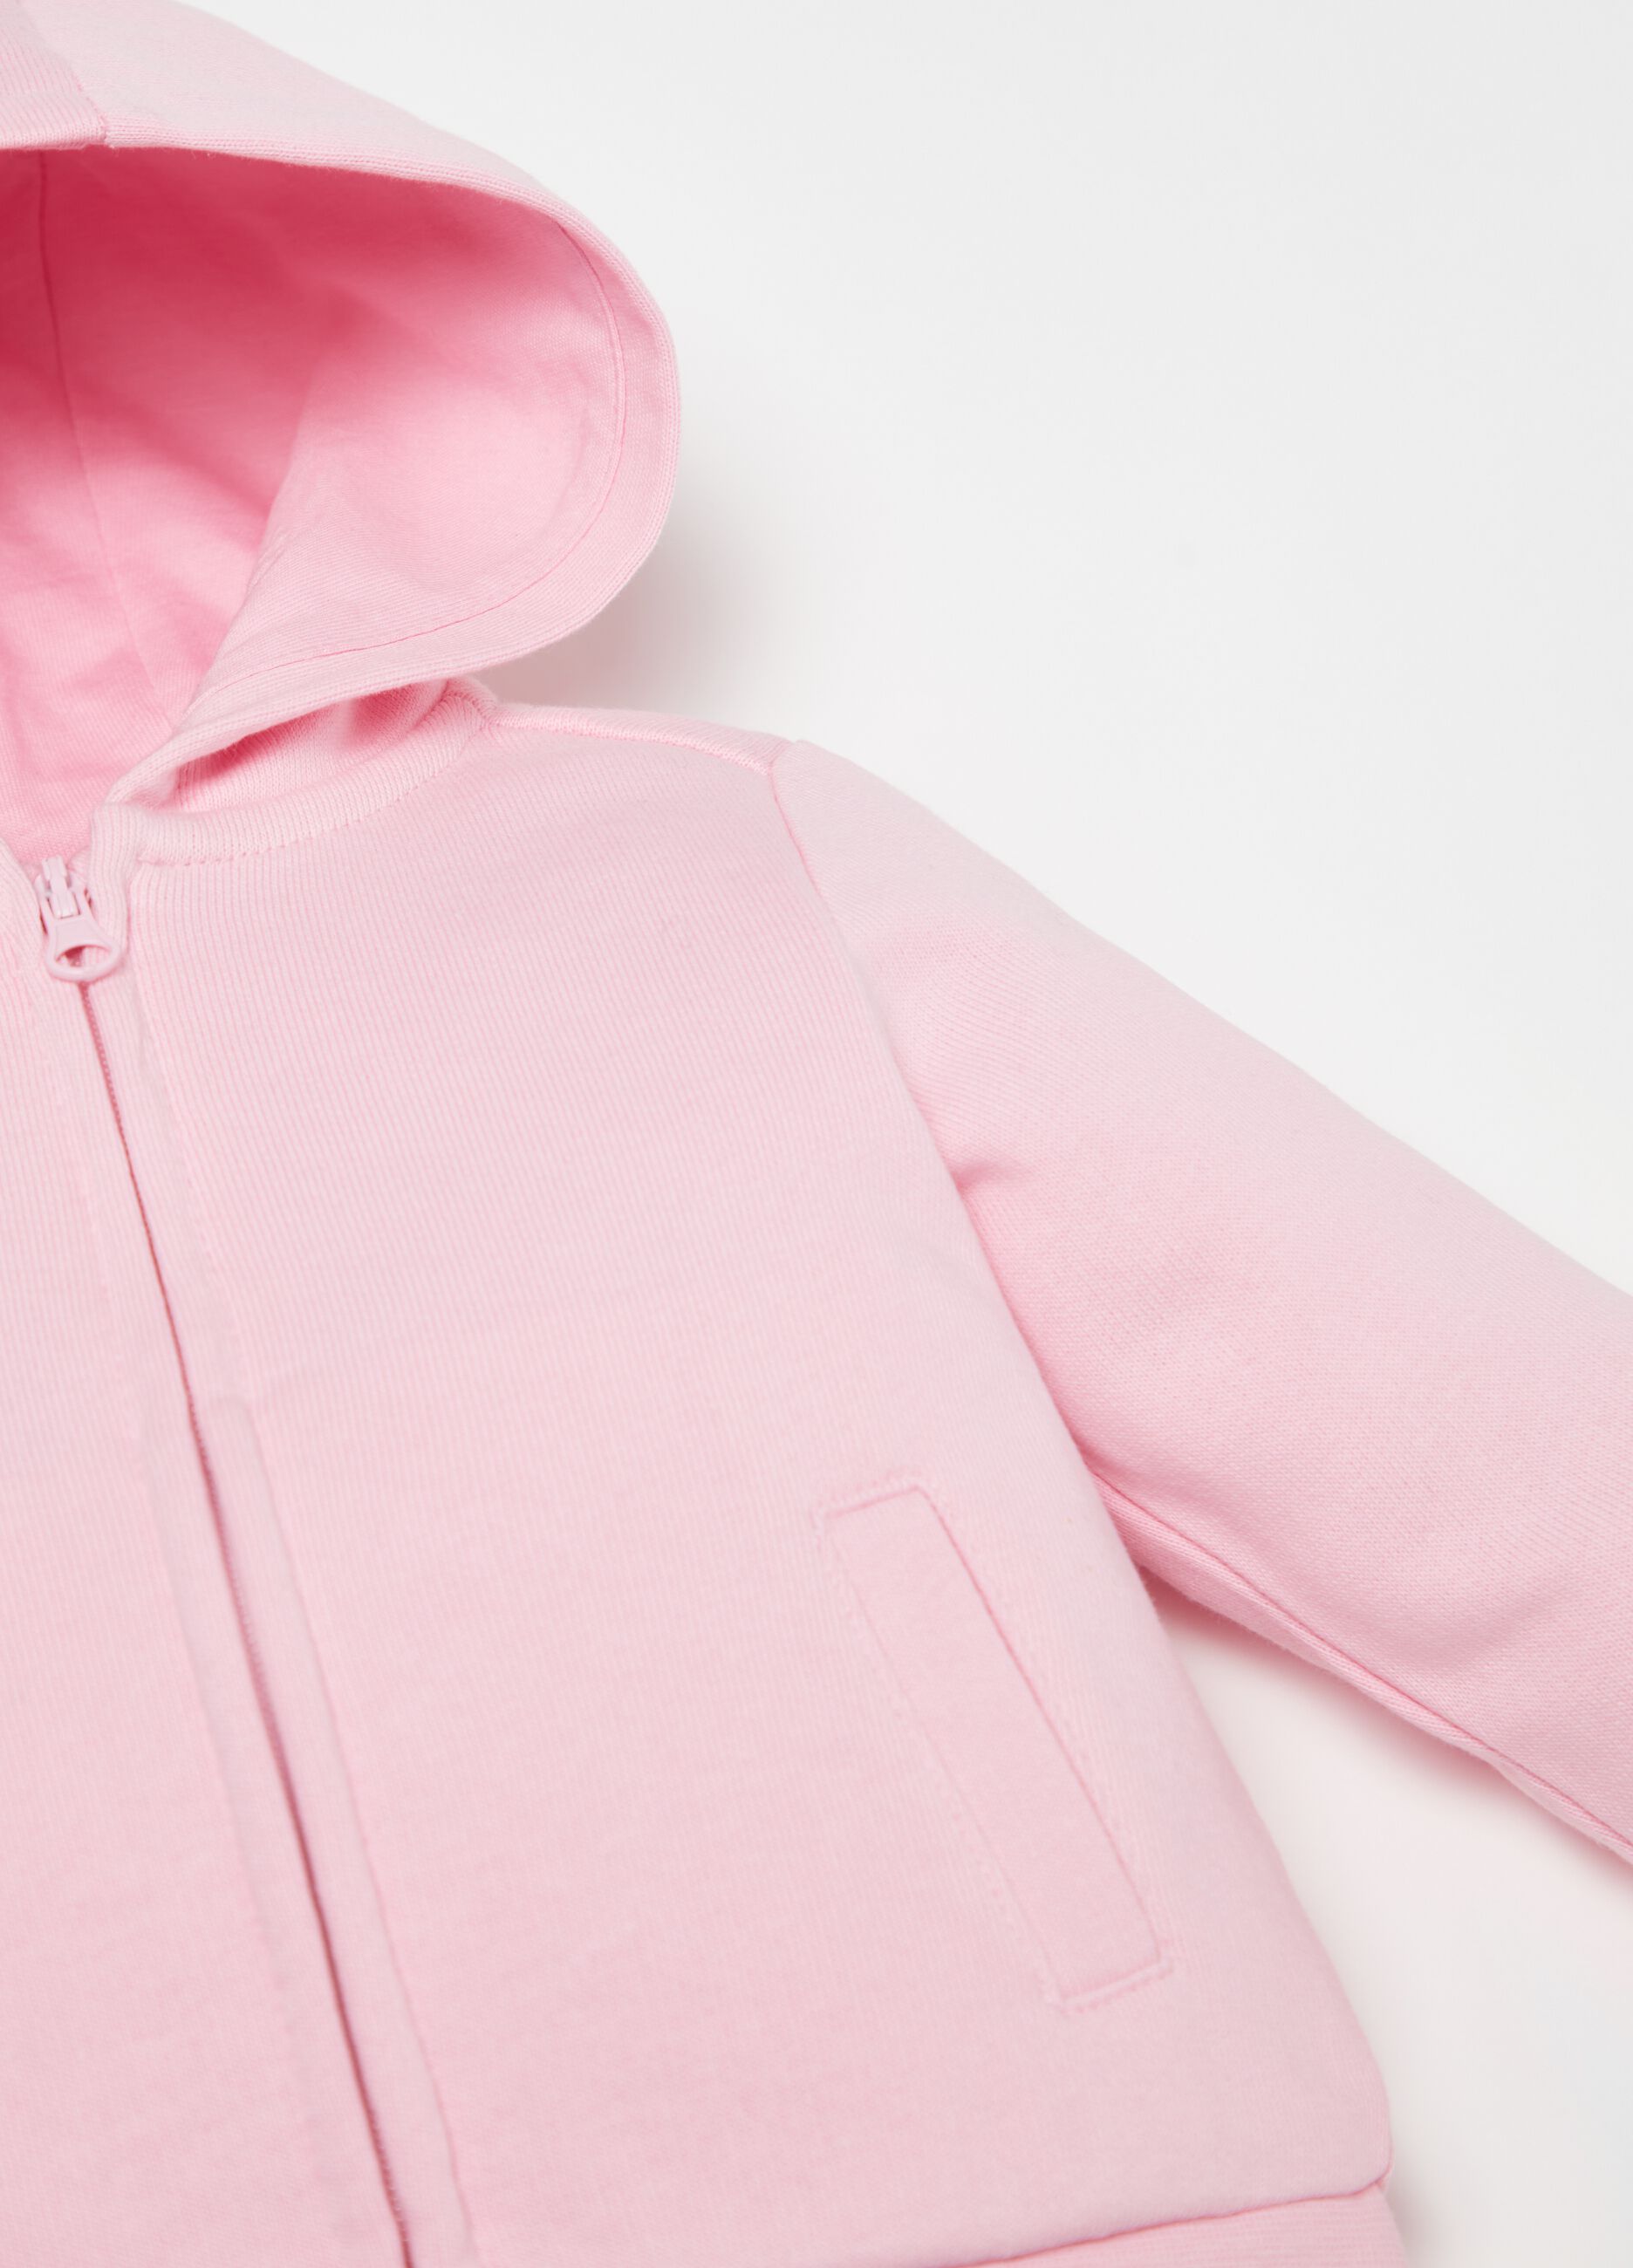 100% cotton full-zip sweatshirt with hood